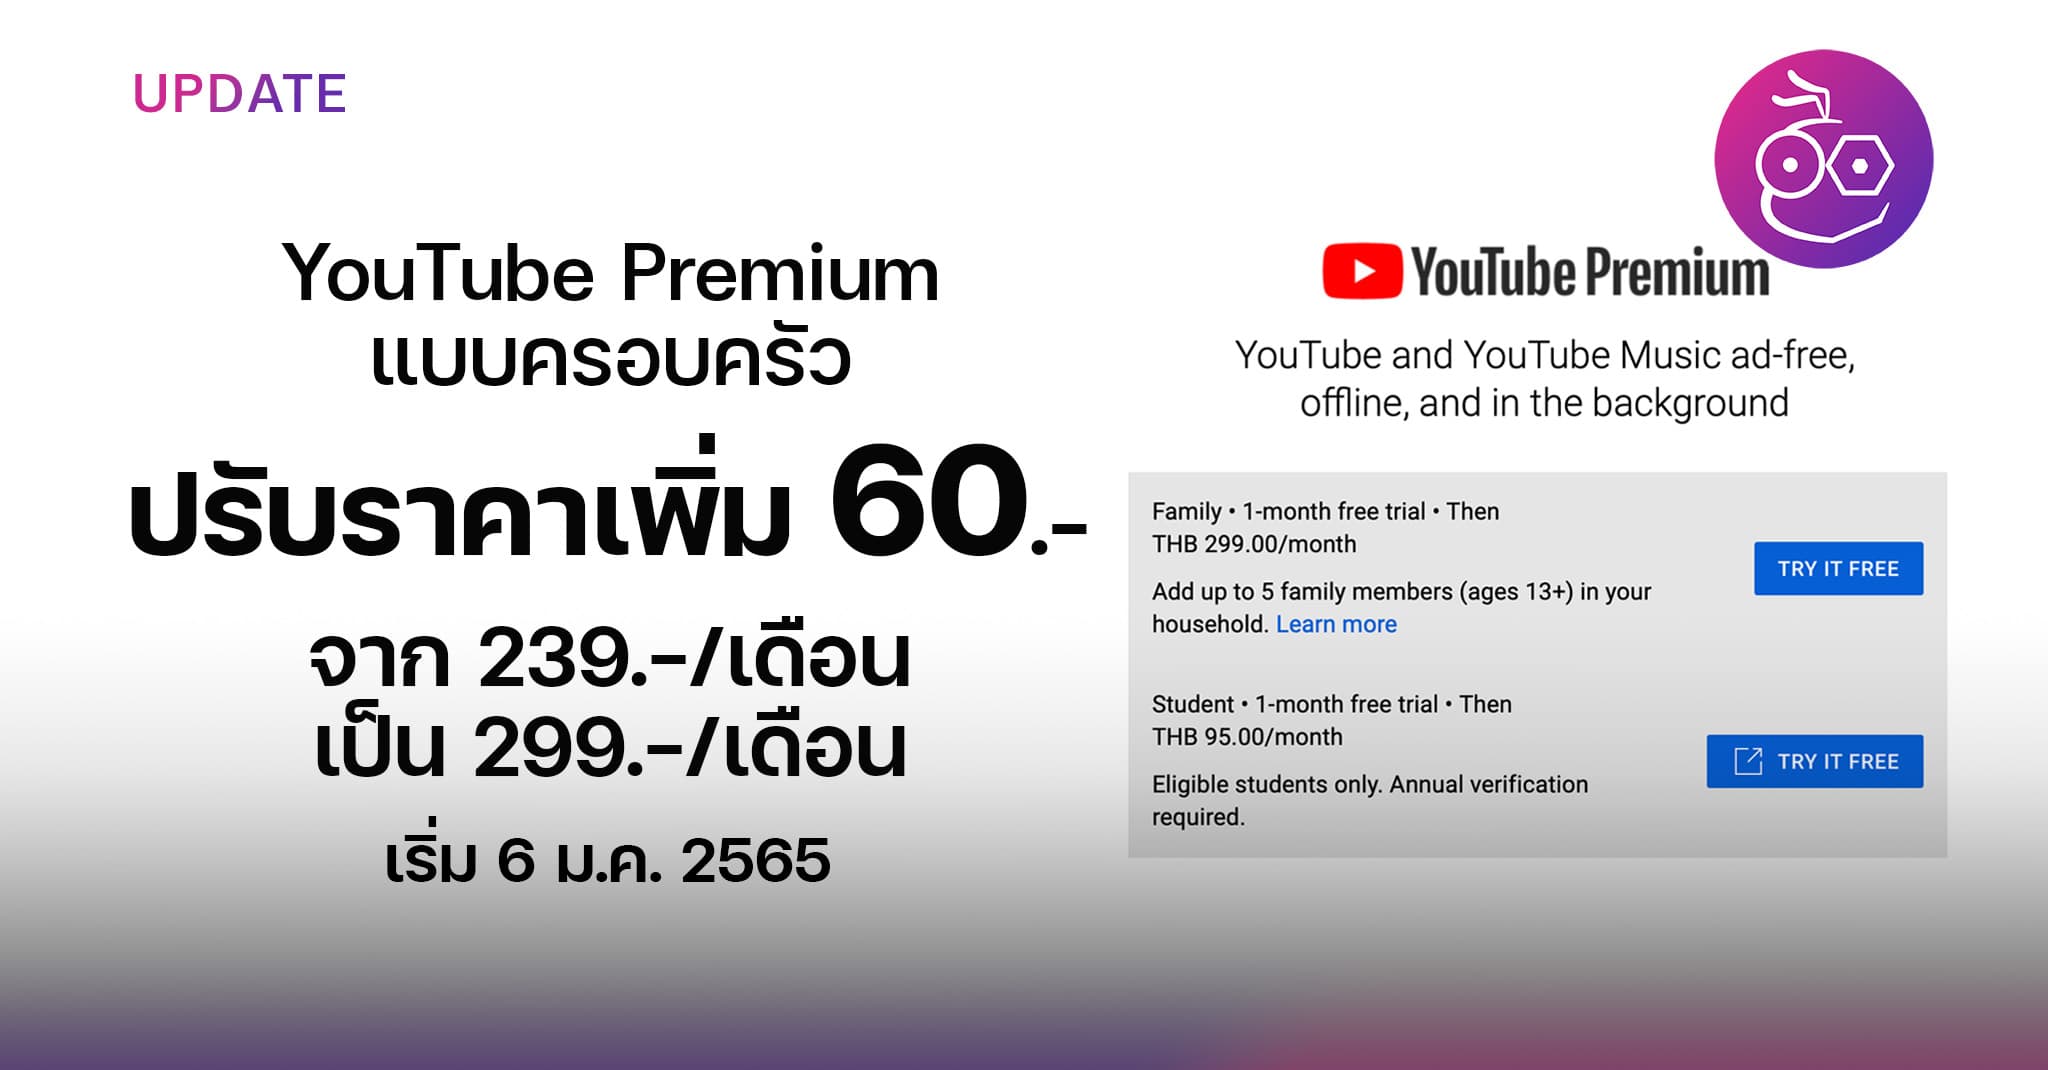 Youtube Premium แผนครอบครัว (Family) ปรับราคาแพงขึ้น 60 บาท จาก 239 เป็น  299 บาท/เดือน